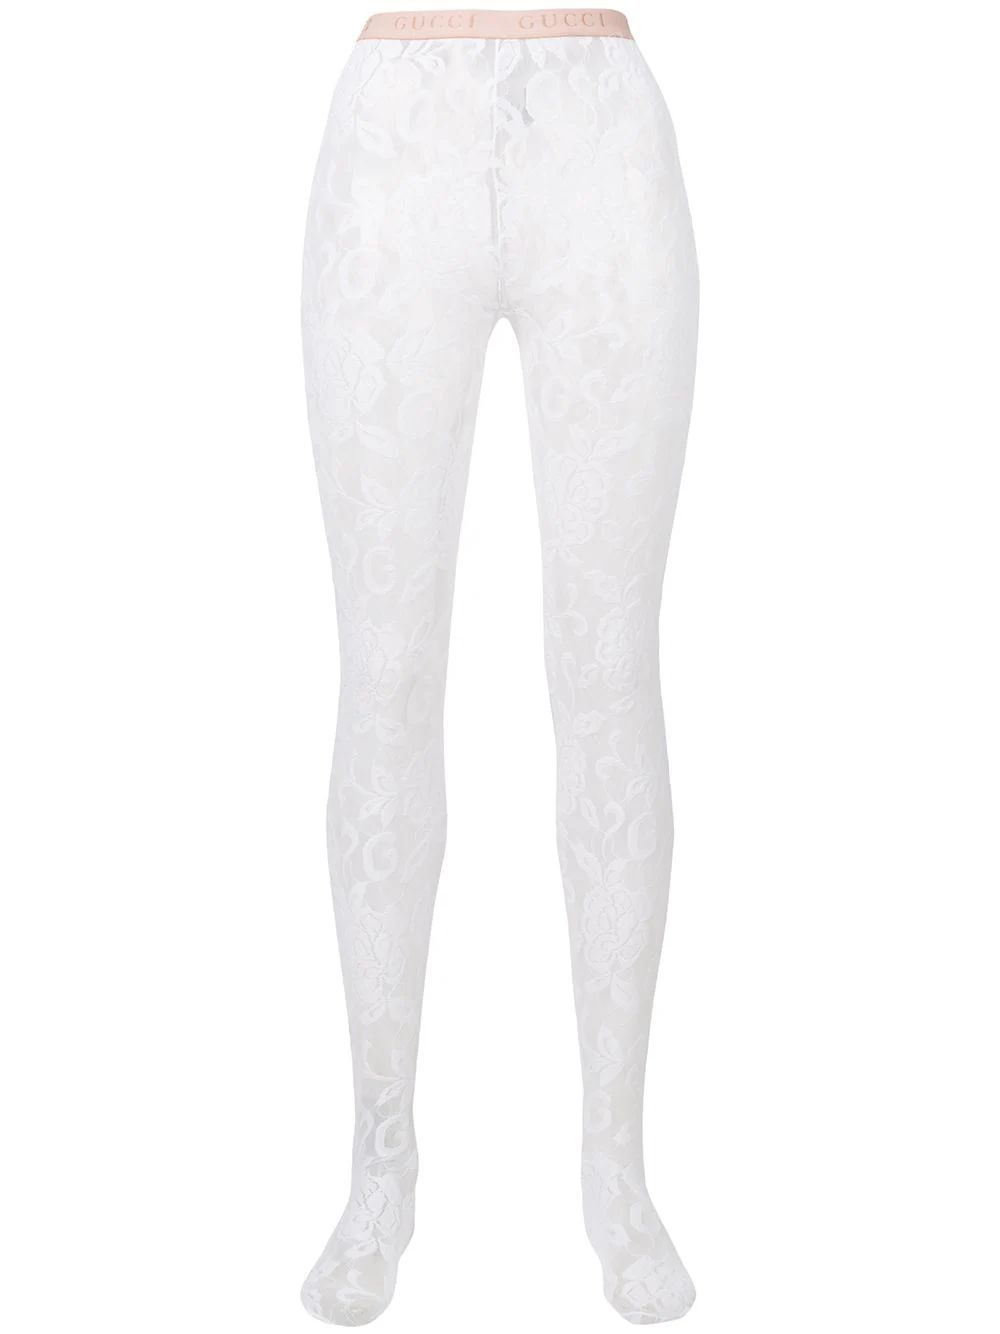 Gucci floral lace tights - White | FarFetch US